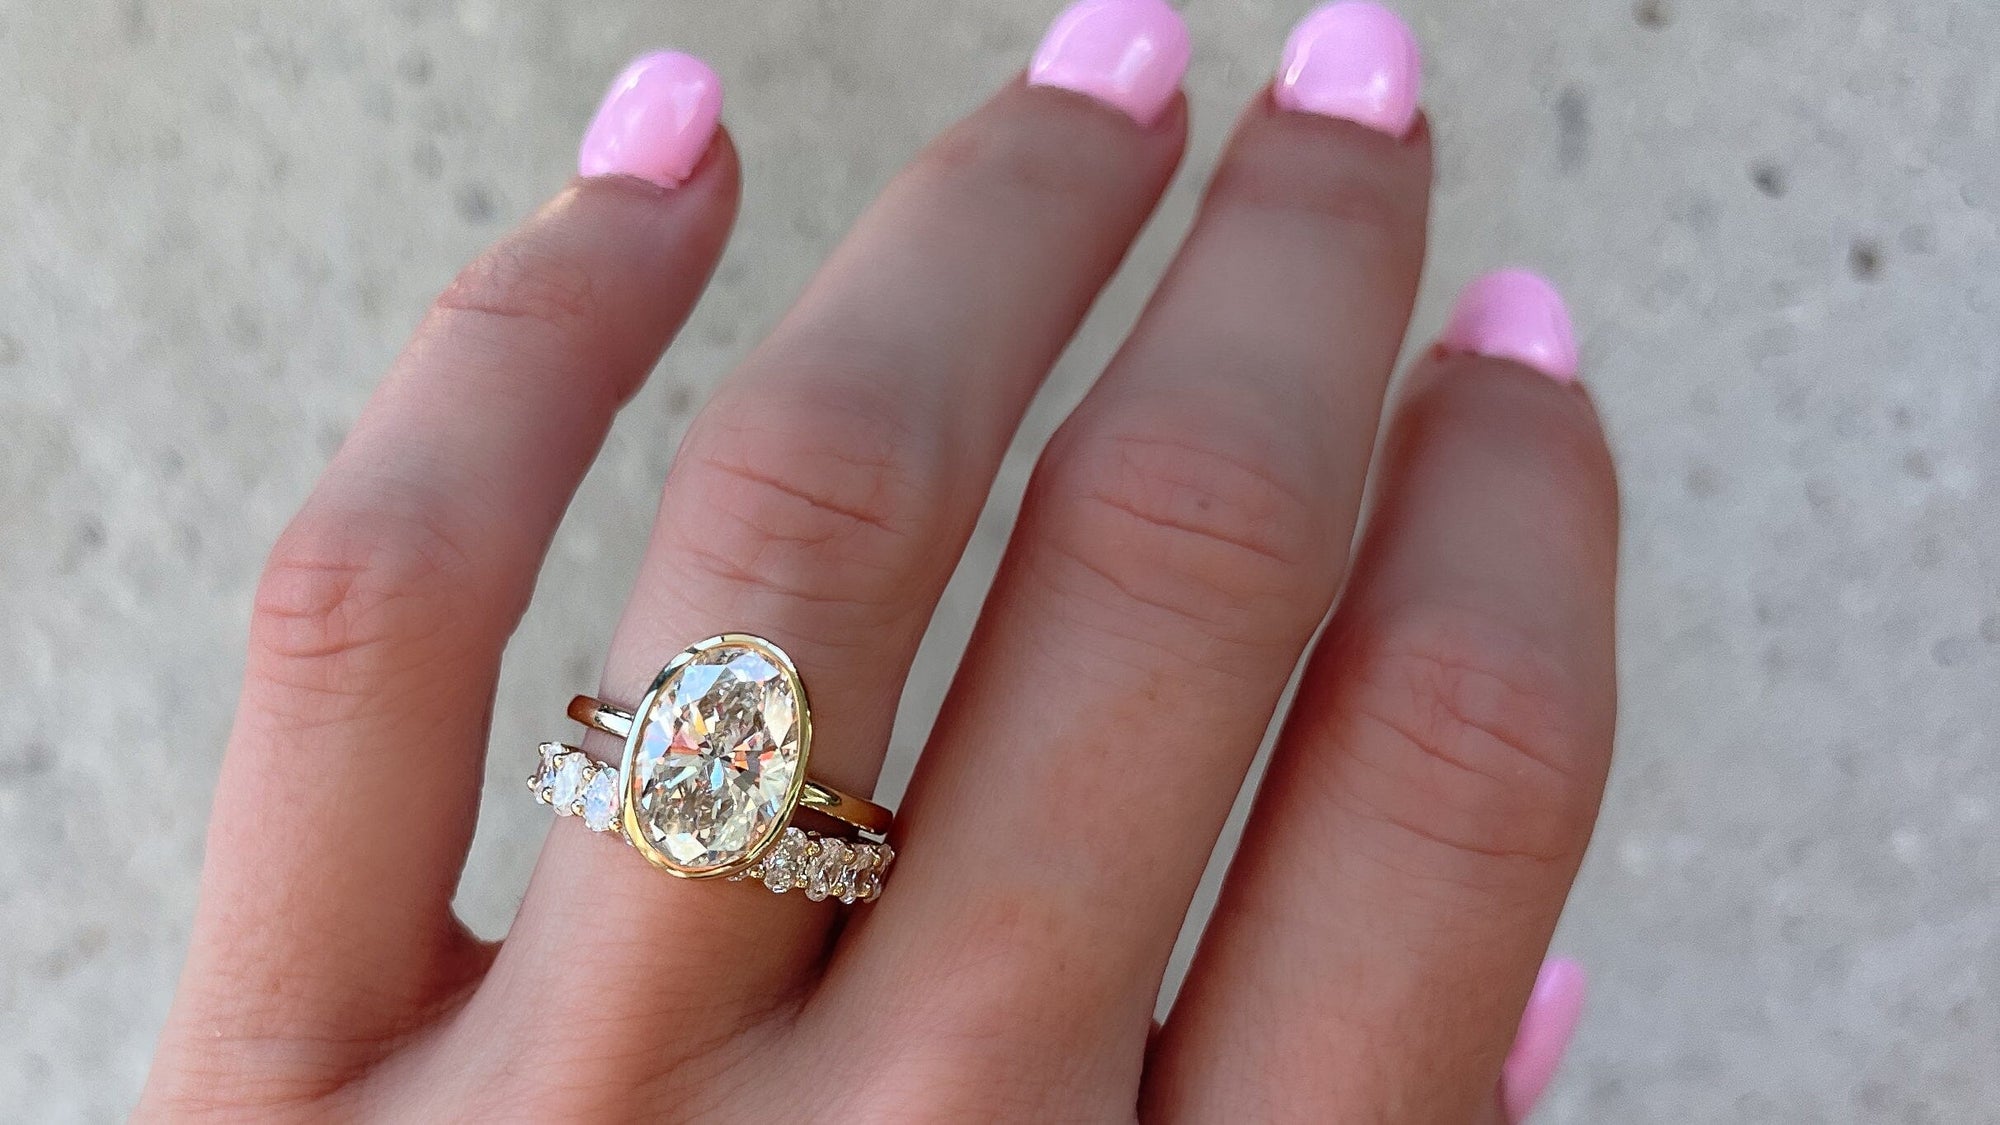 Should Couples Choose Engagement Ring Designs Together?